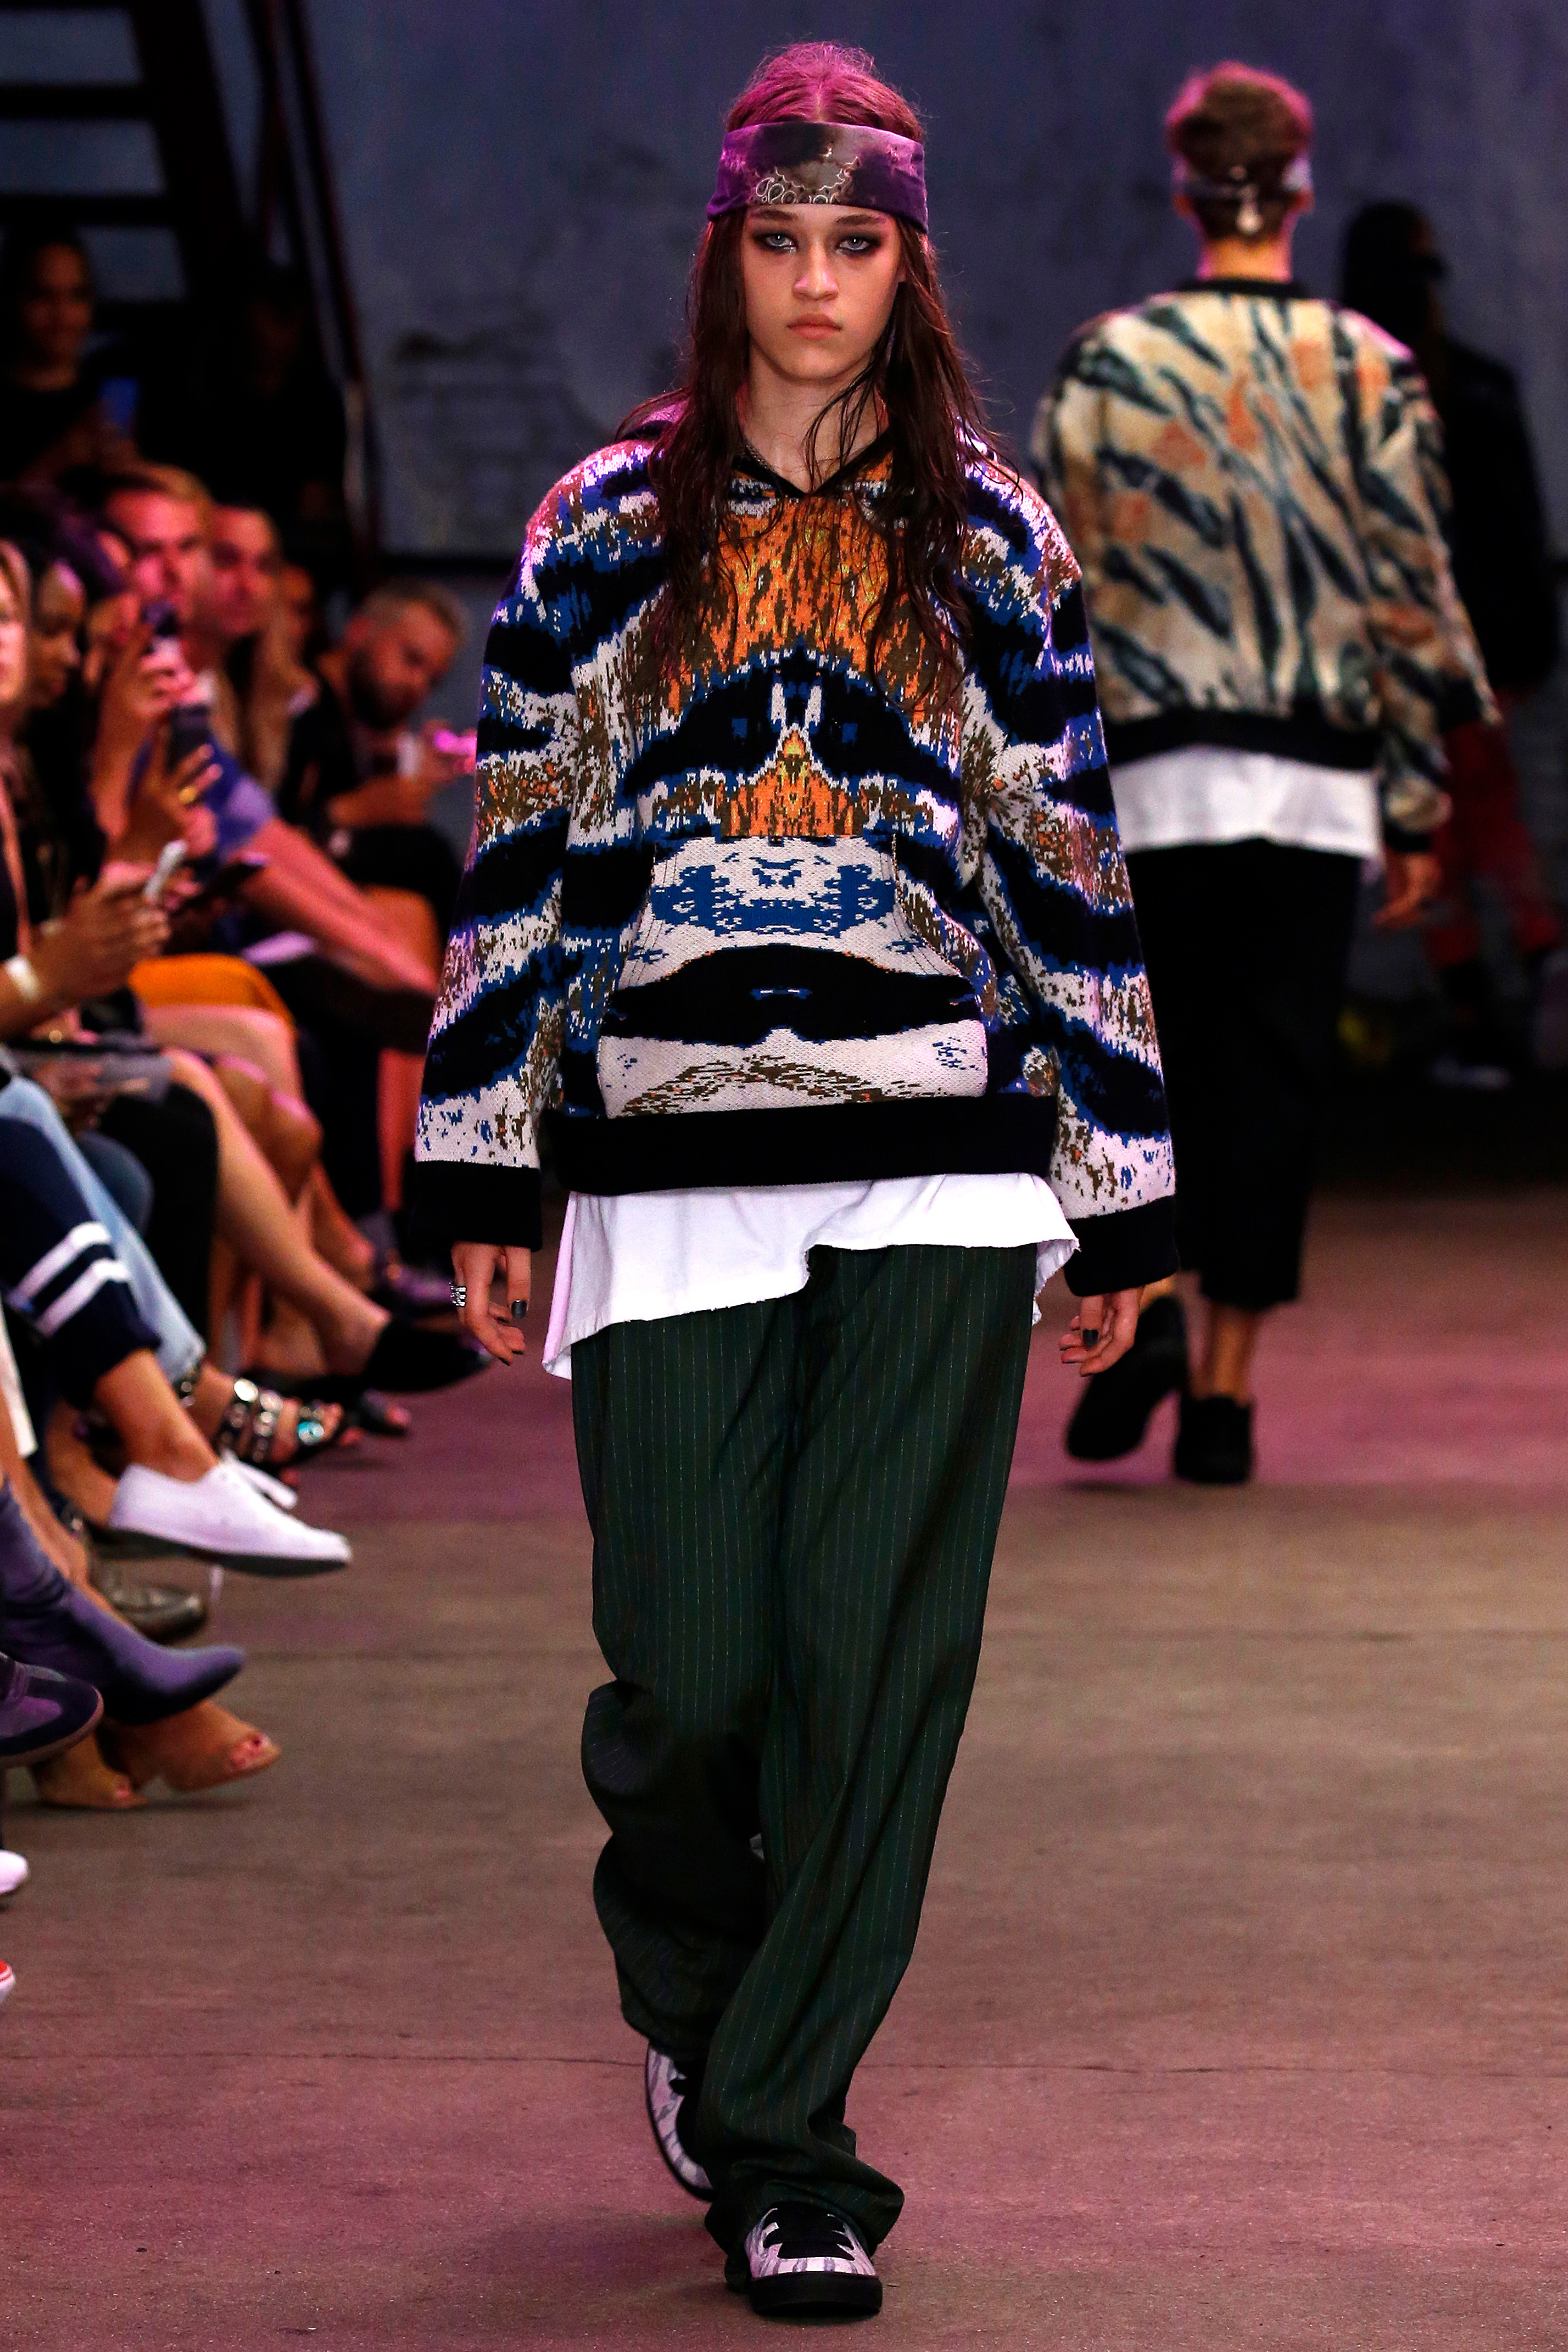 A model in big black pants, a colorful sweater, and a headscarf walks the Baja East runway